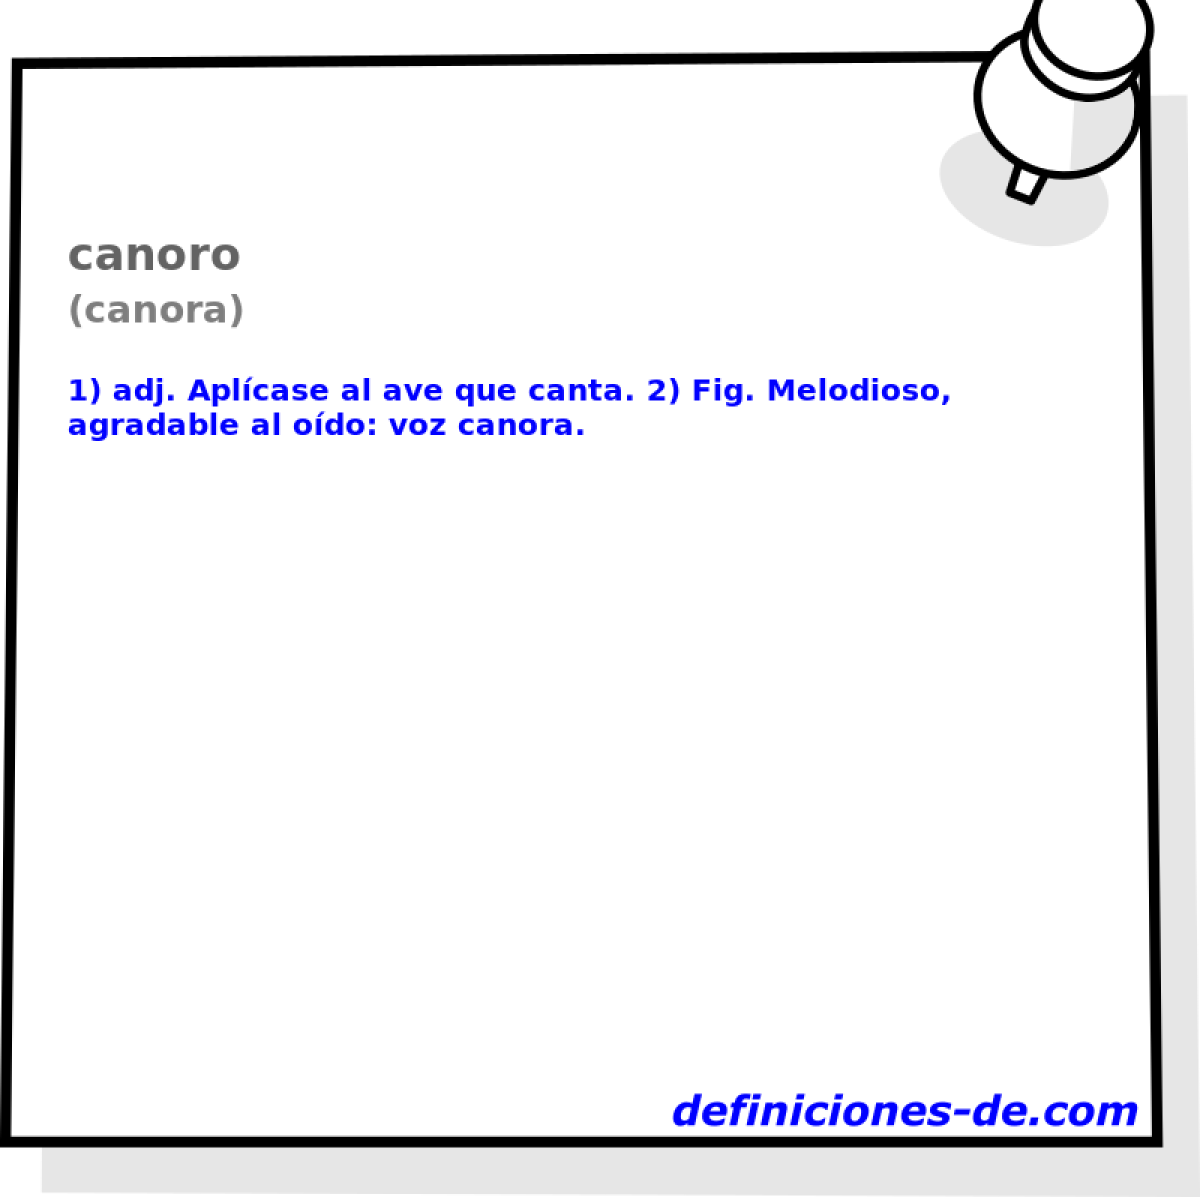 canoro (canora)